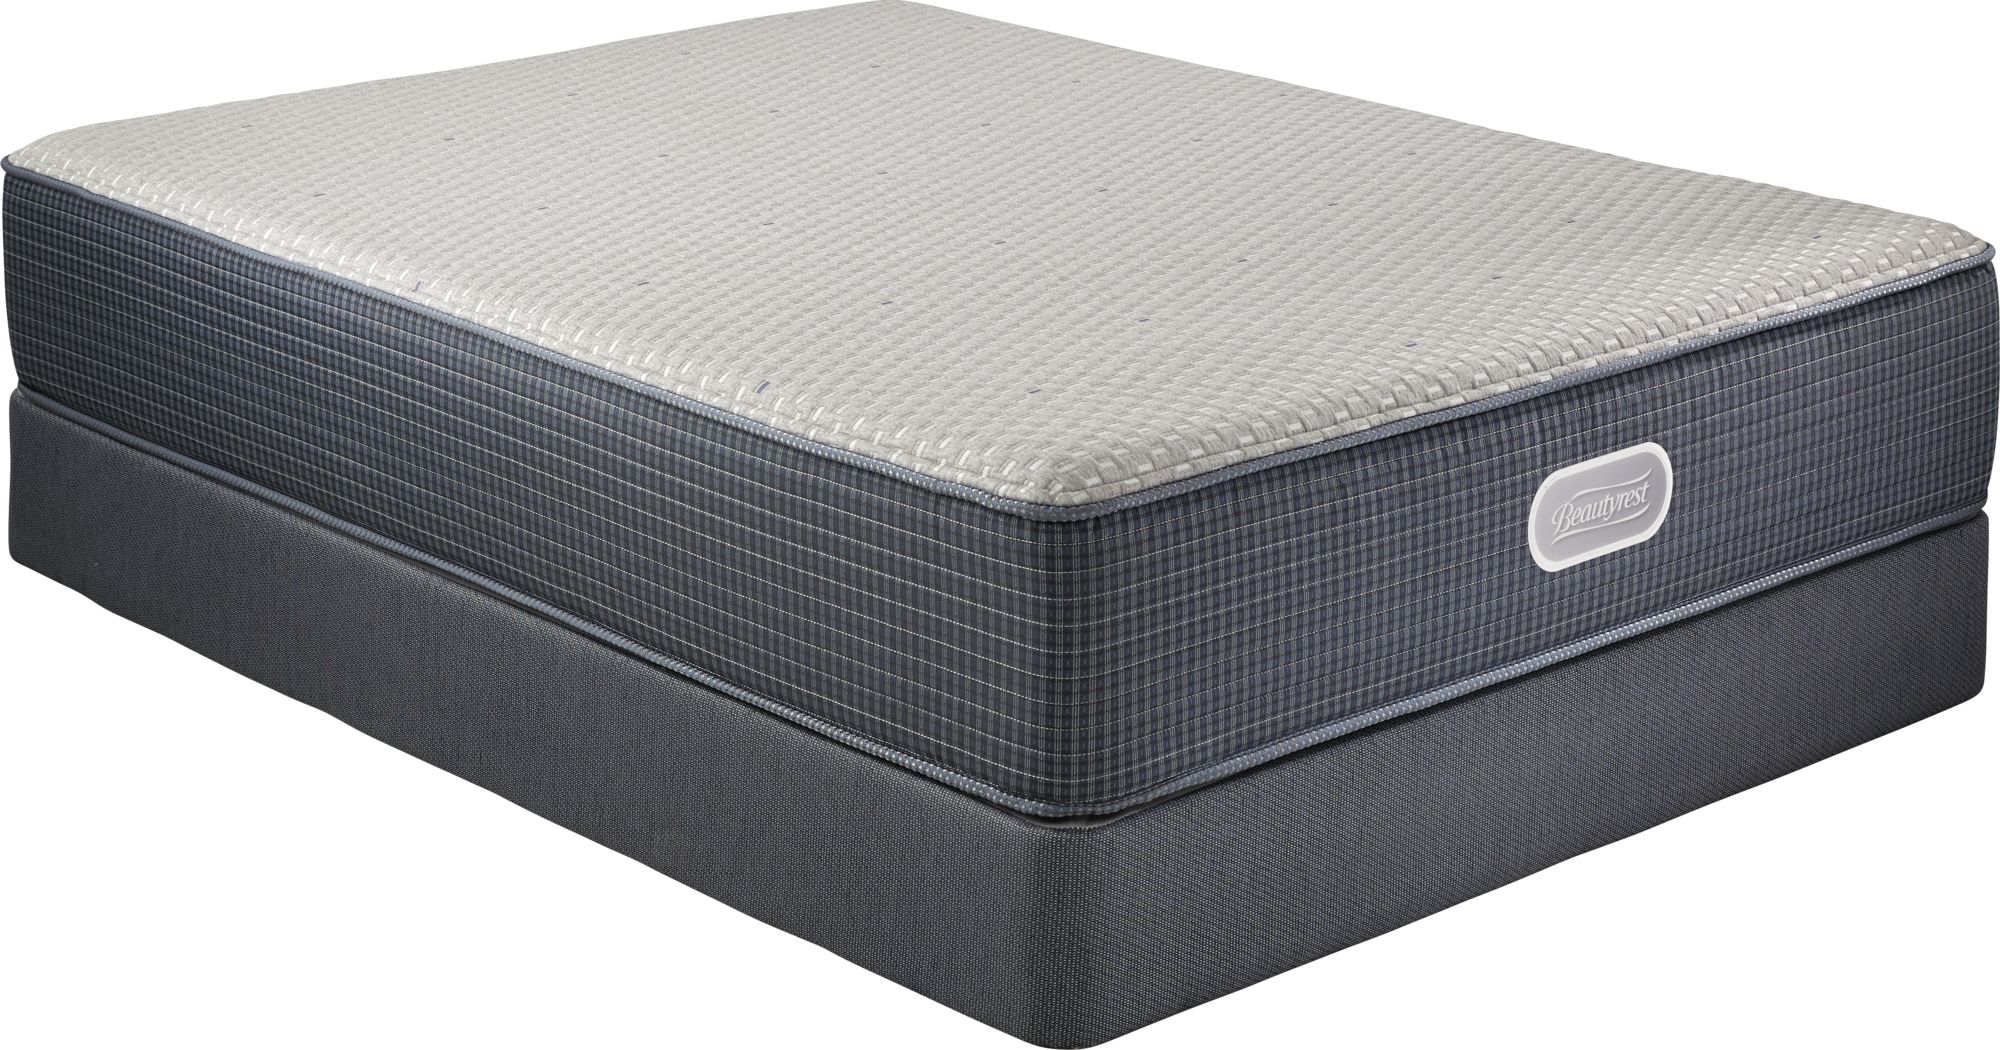 beautyrest hybrid geneva lake king mattress set reviews